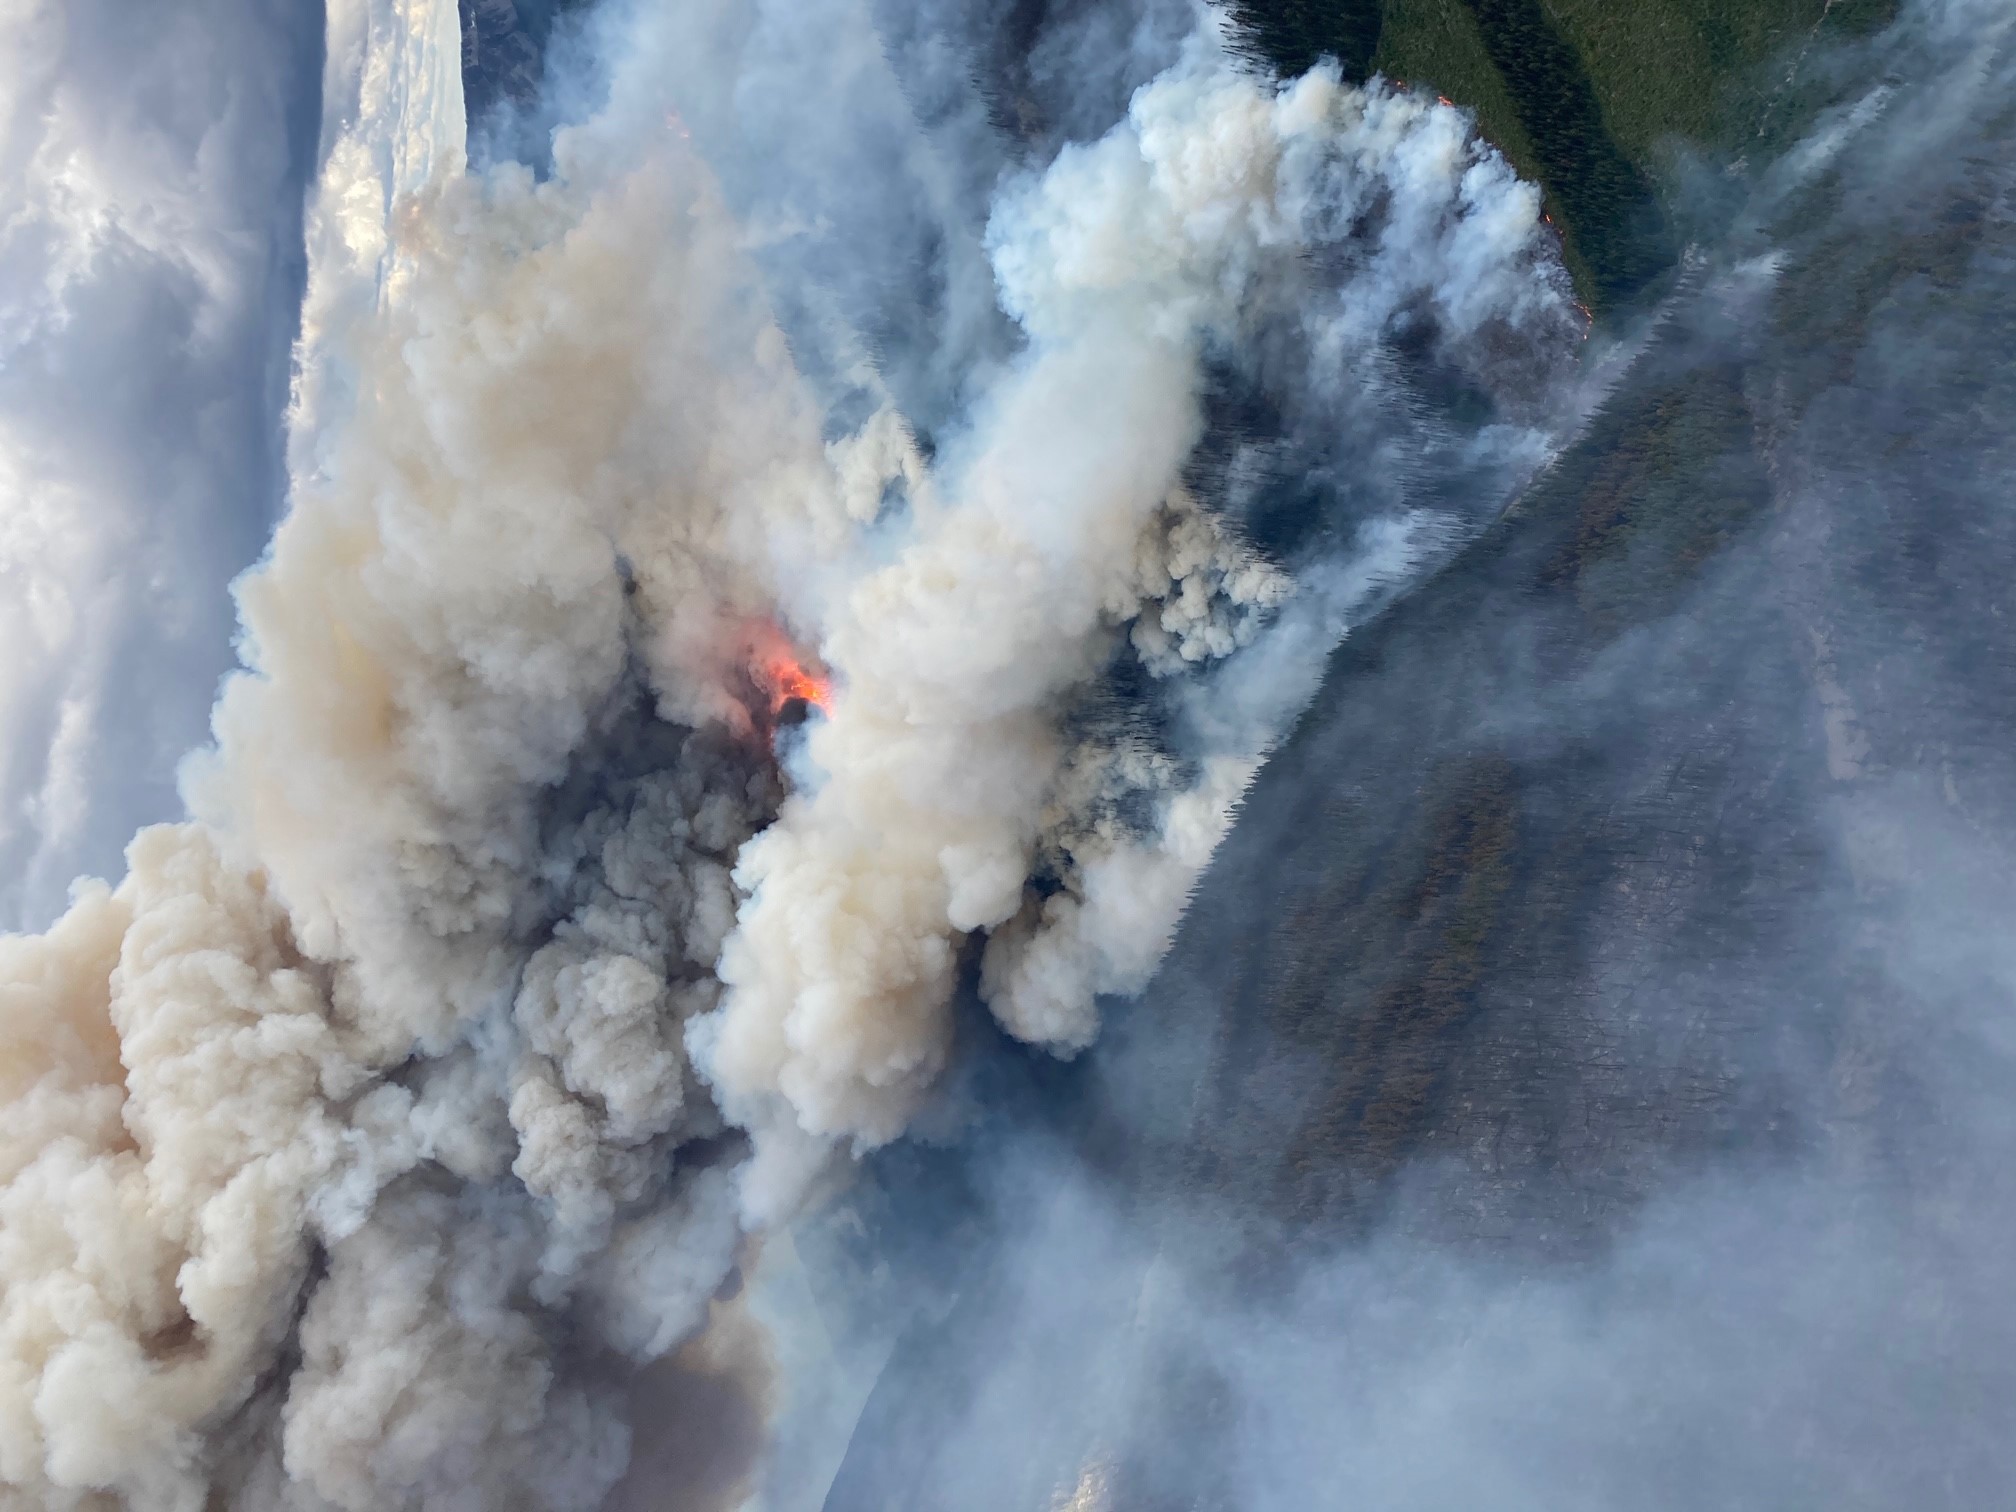 https://globalnews.ca/wp-content/uploads/2020/09/Doctor-Creek-wildfire.jpg